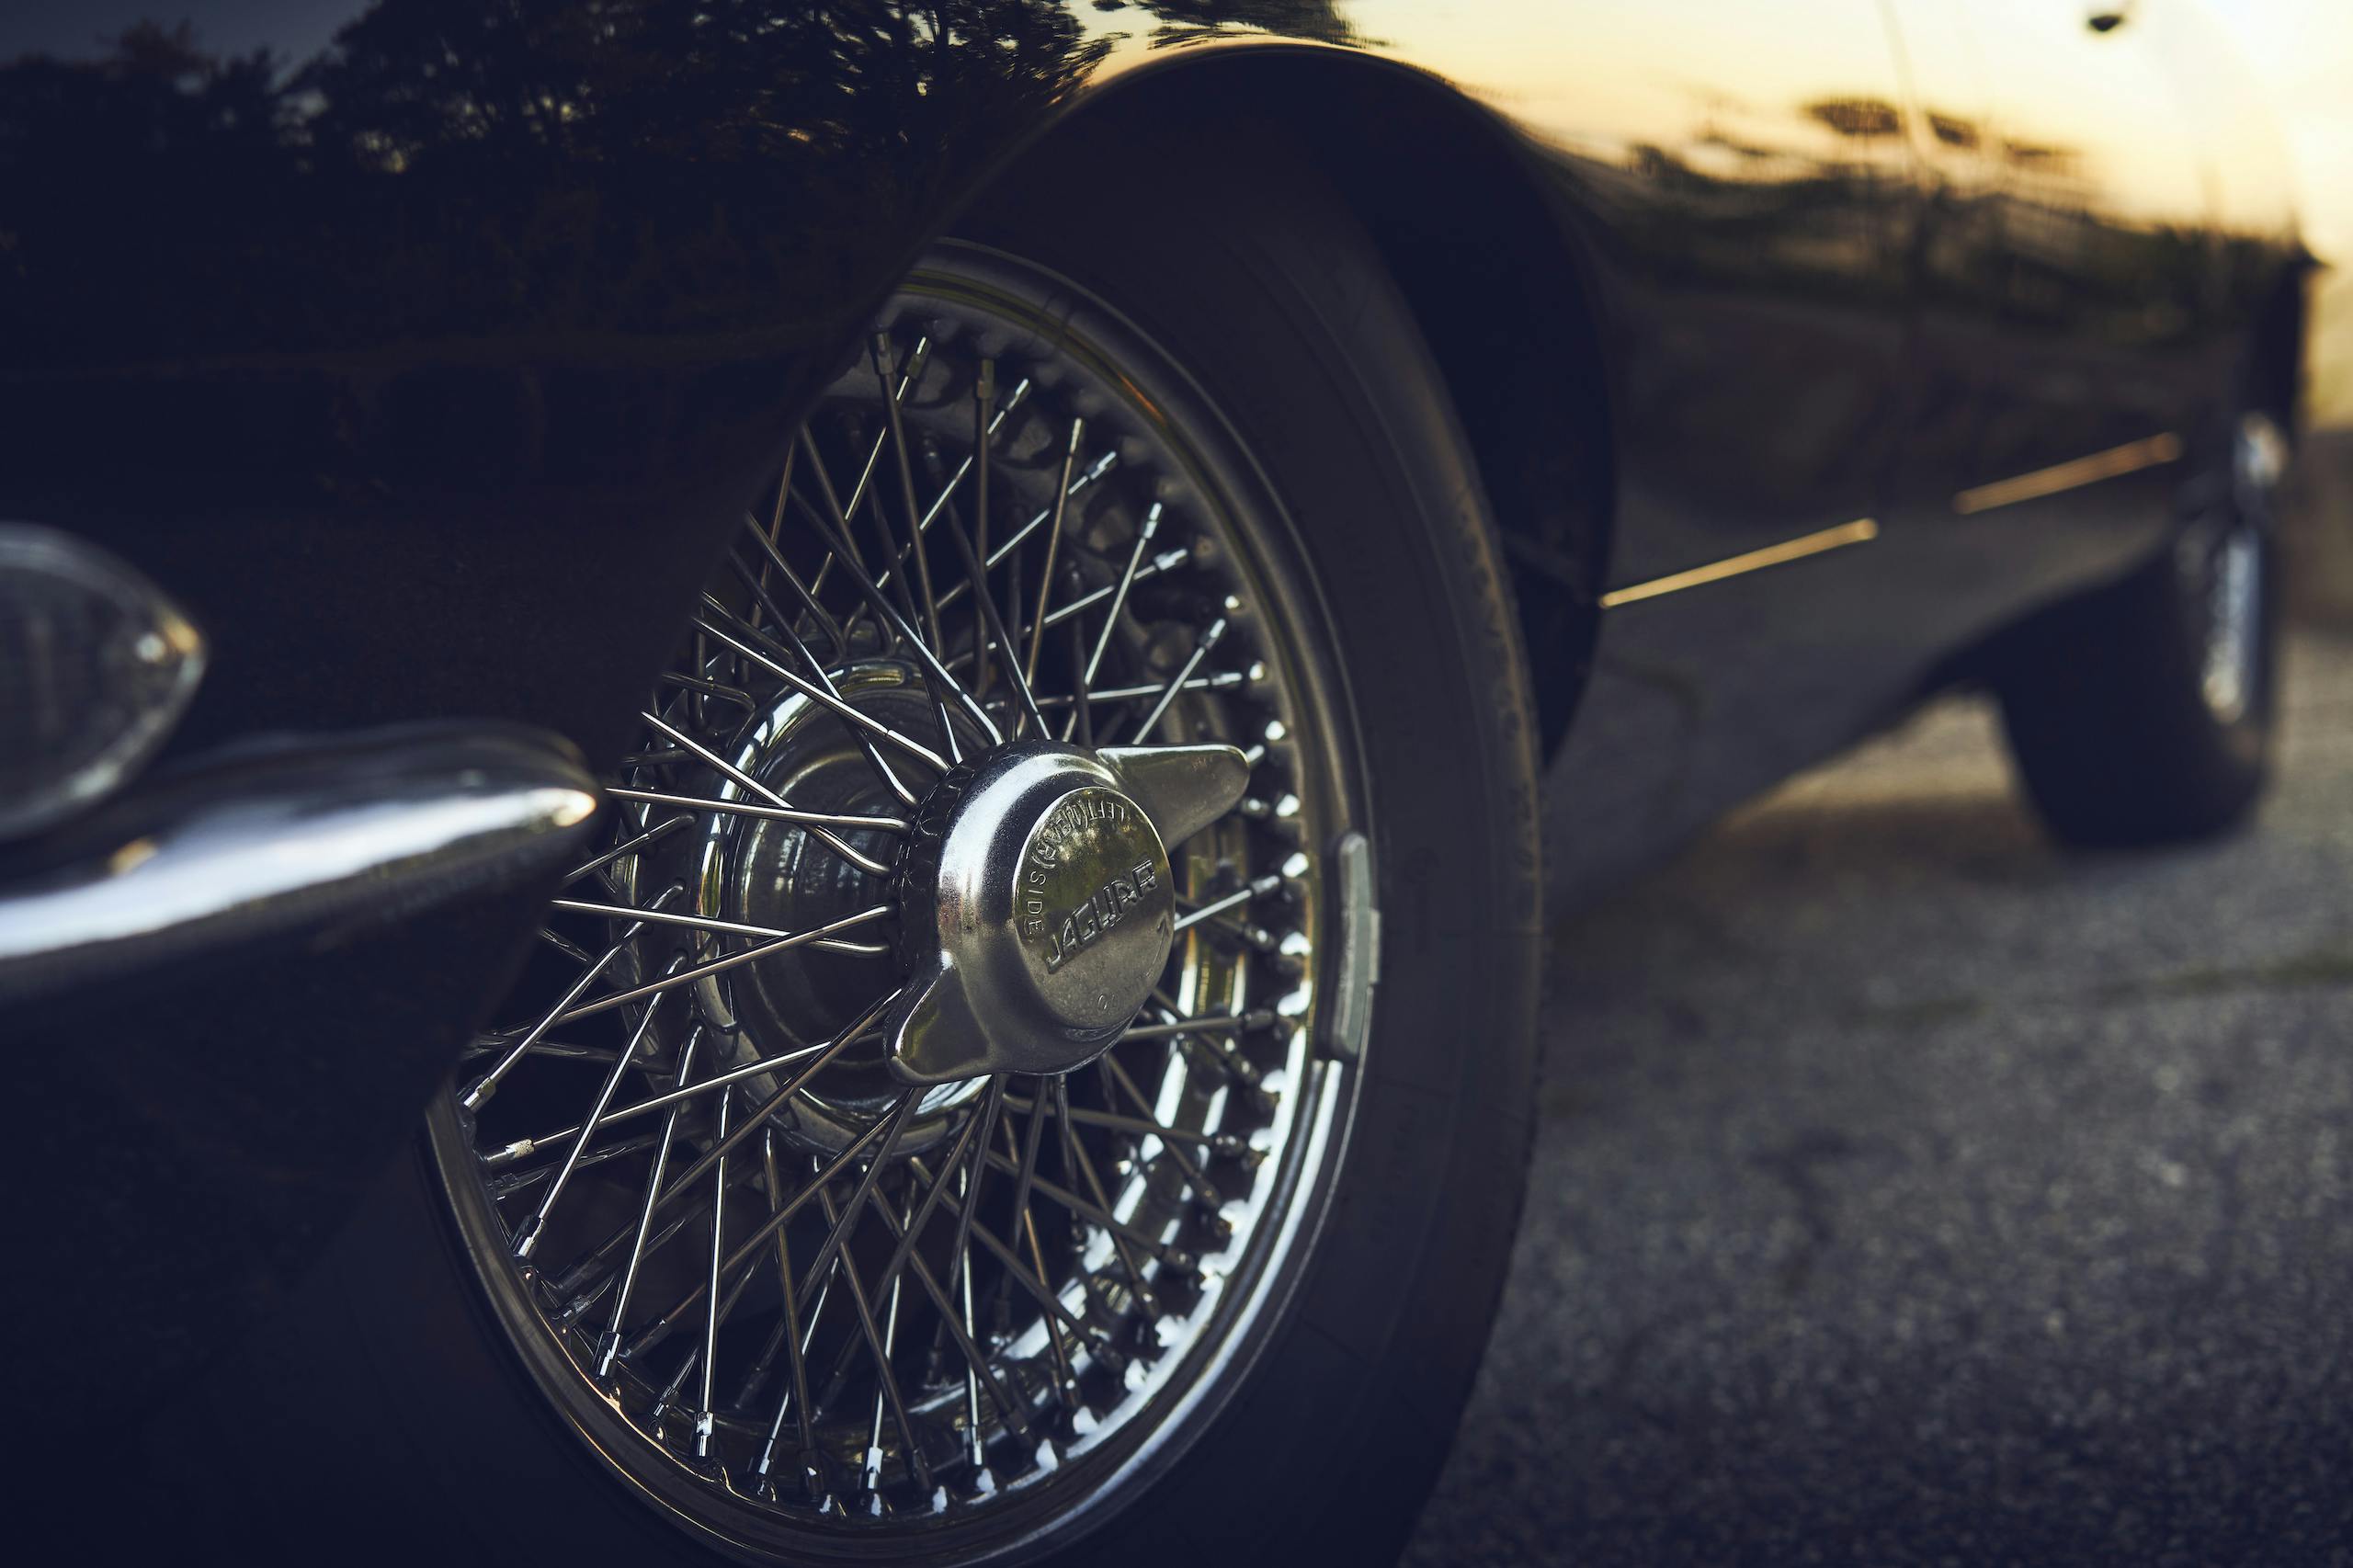 Jaguar E-Type wheel hub spoke detail